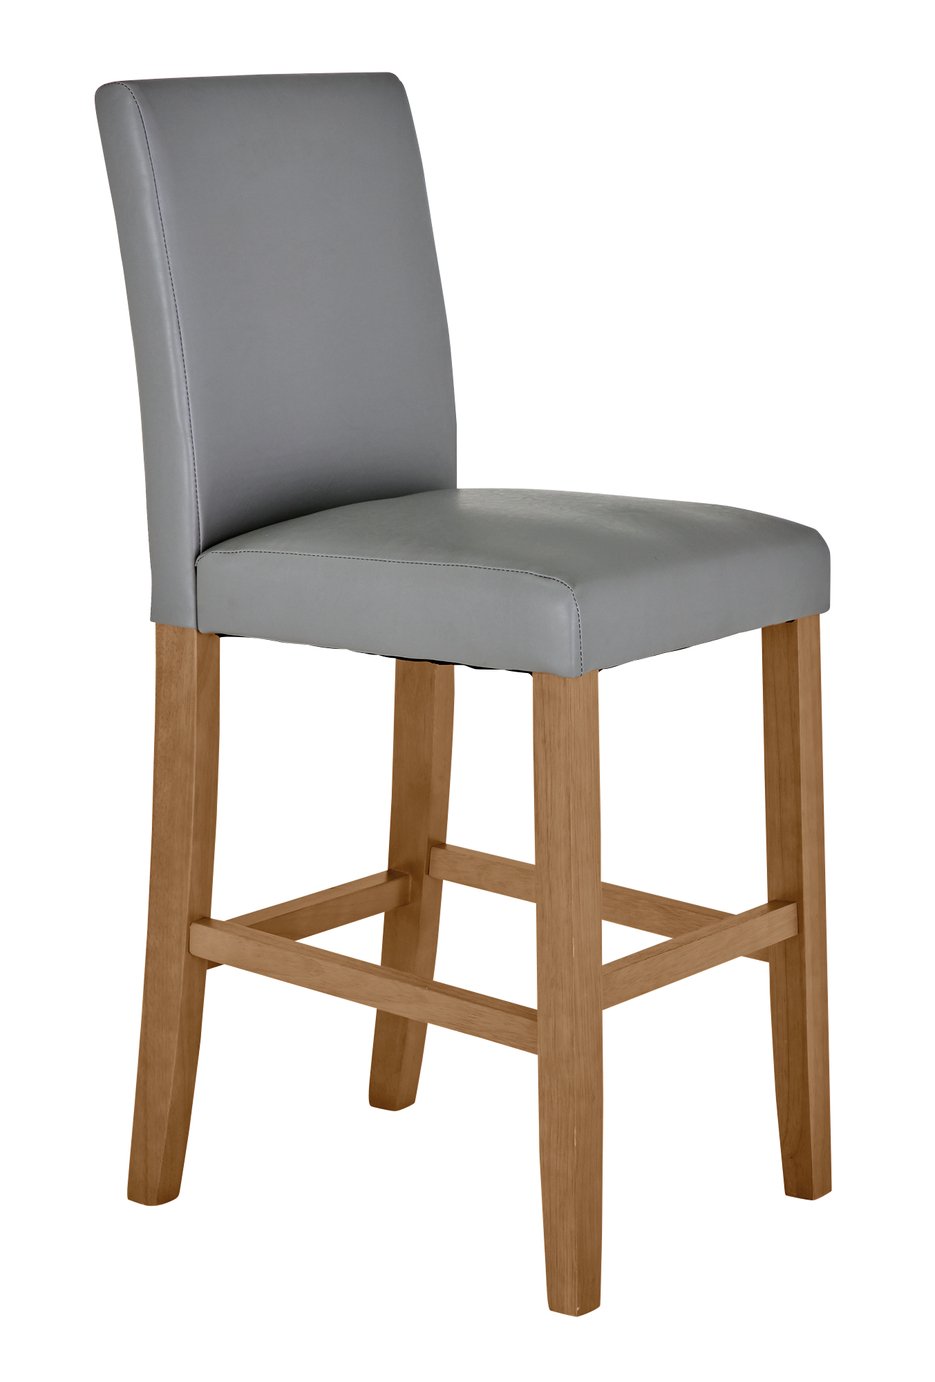 Argos kitchen stools